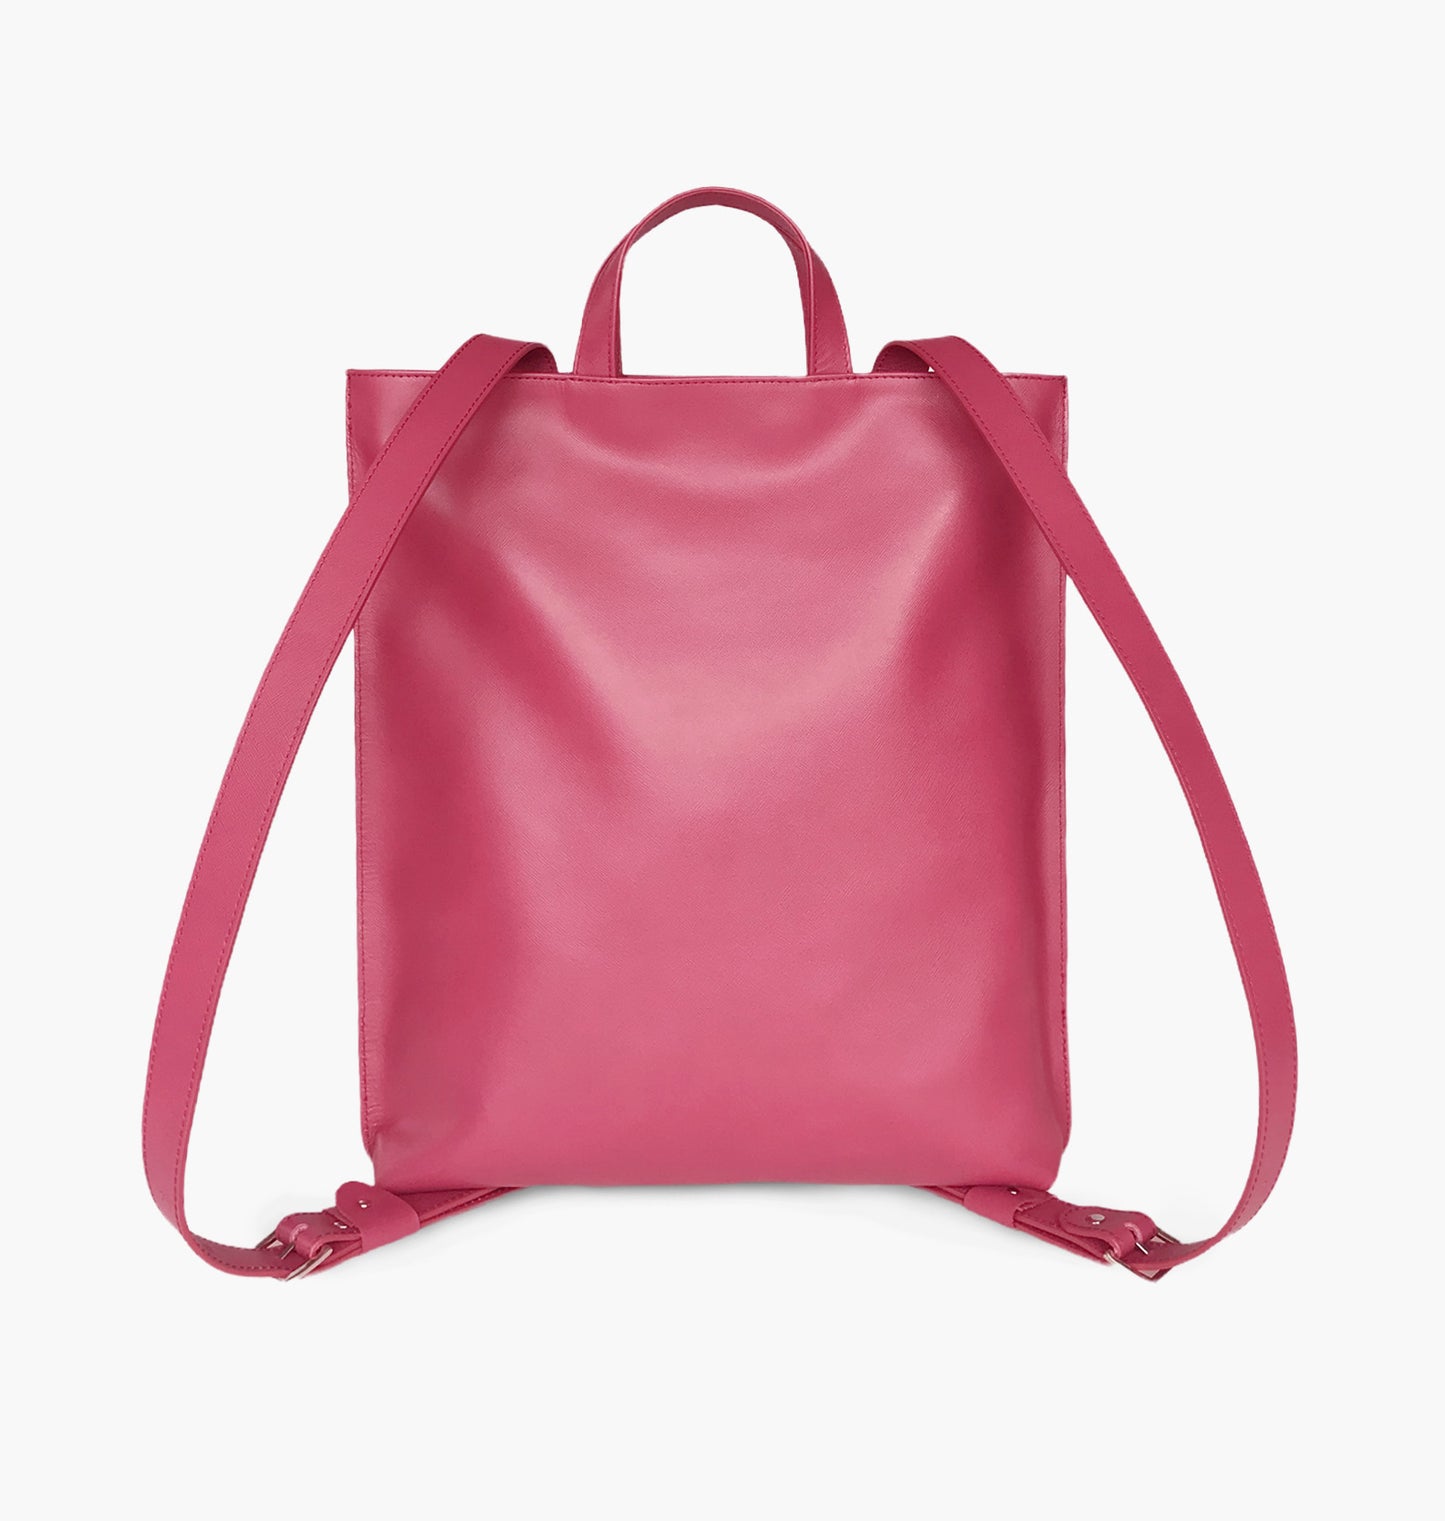 Réka backpack - dark pink with crossprint surface